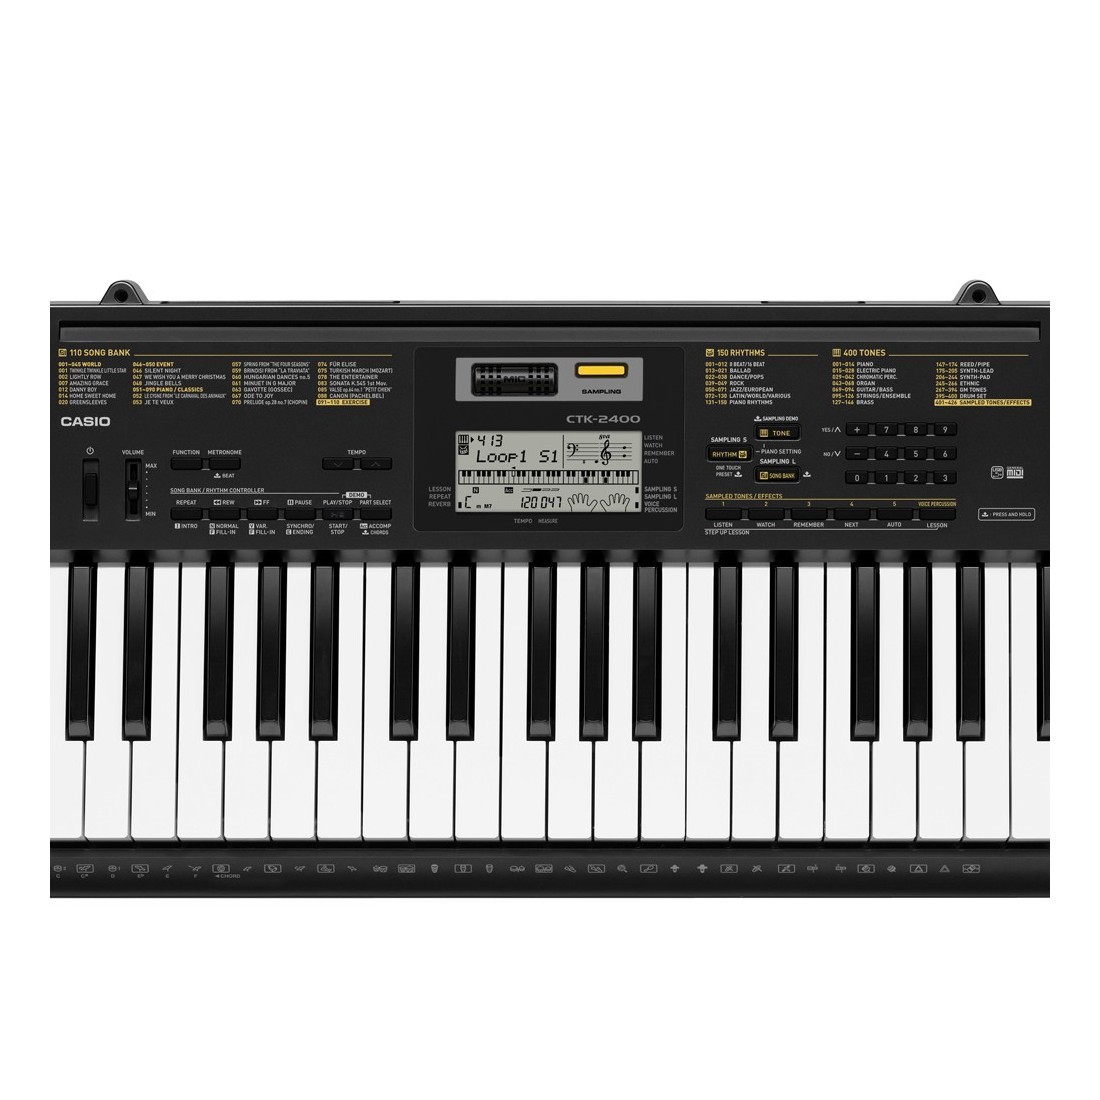 musical keyboard software free download